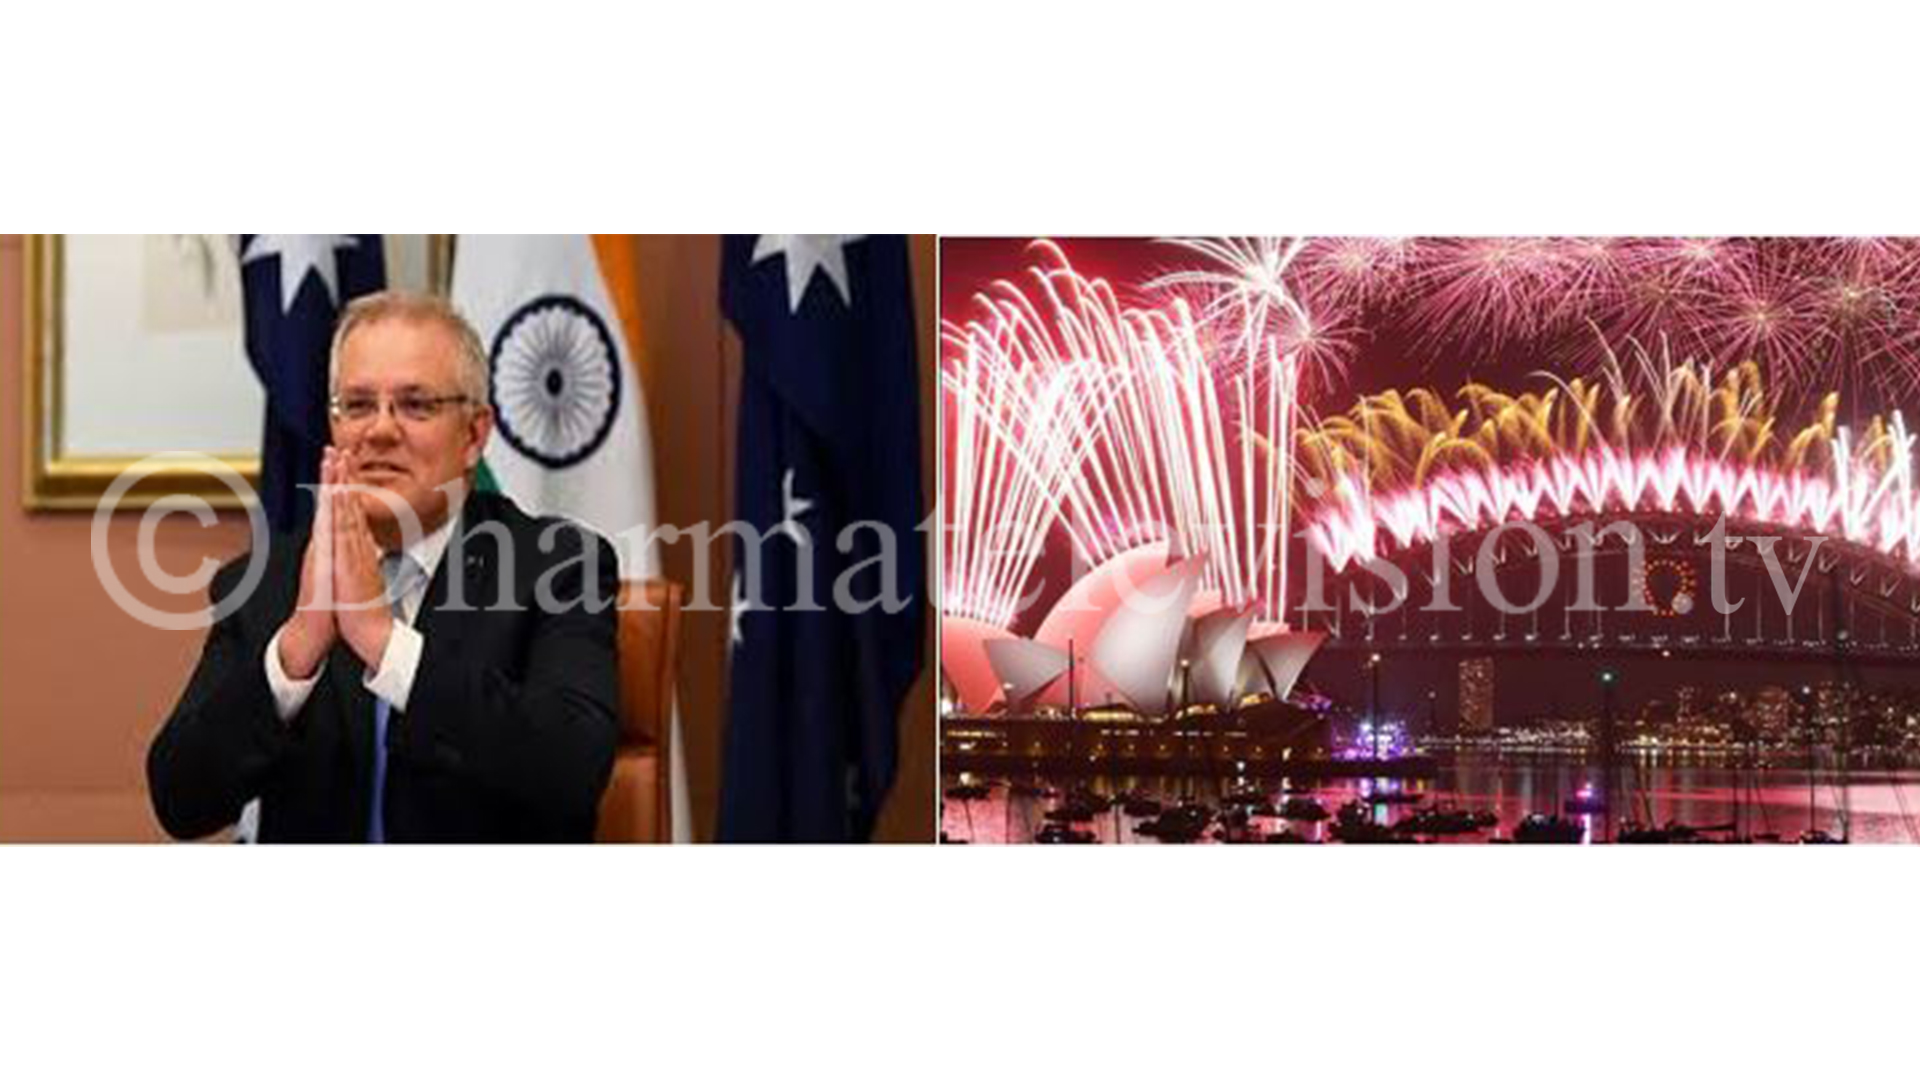 Diwali greetings extended by Australian PM Scott Morrison